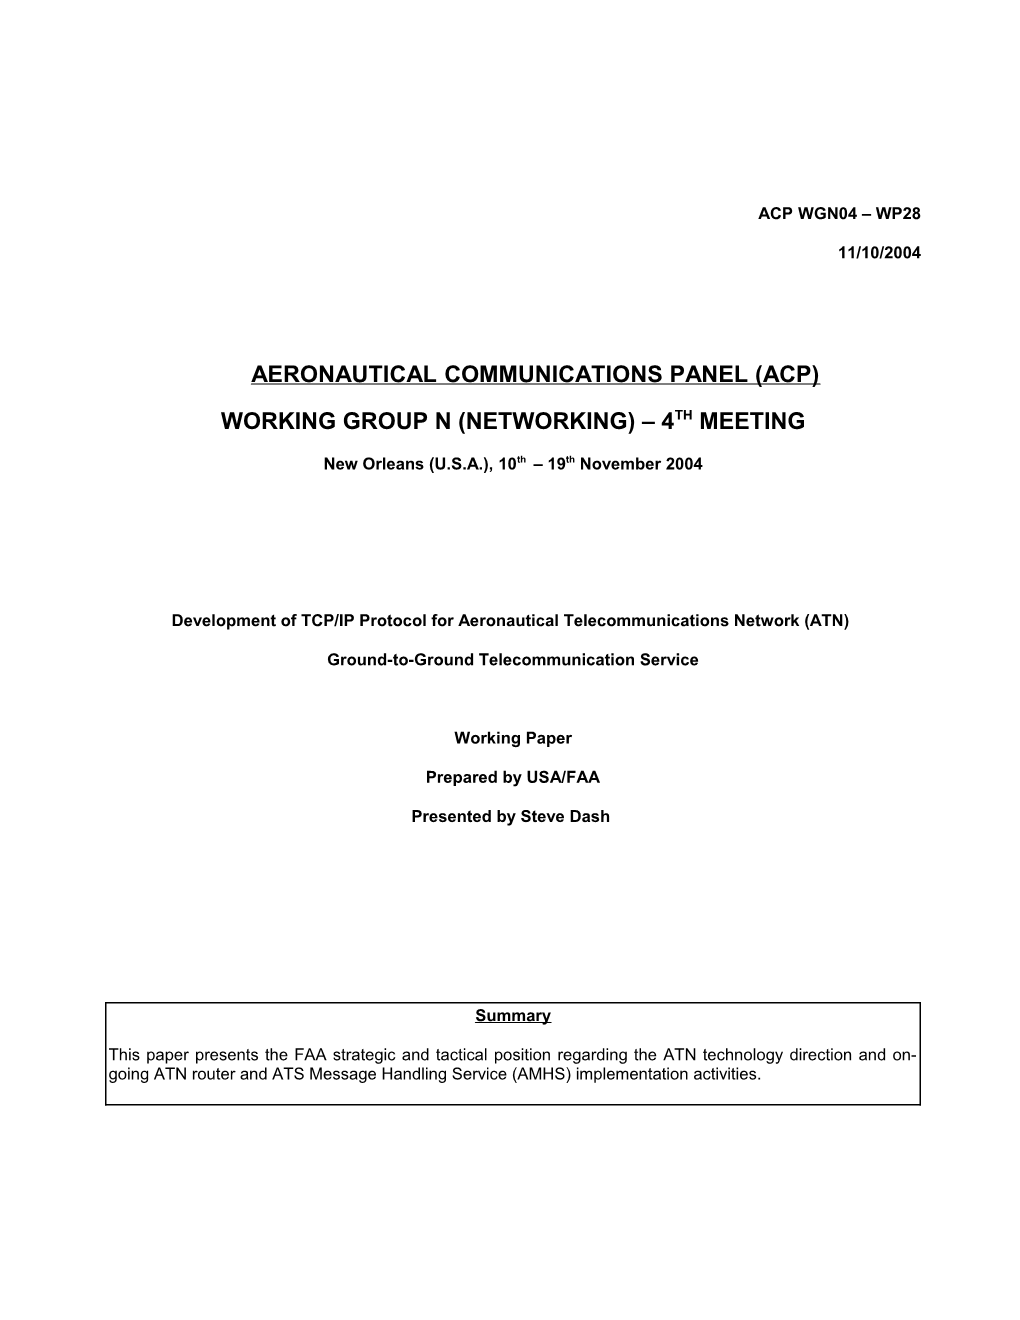 Development of TCP/IP Protocol for Aeronautical Telecommunications Network (ATN)